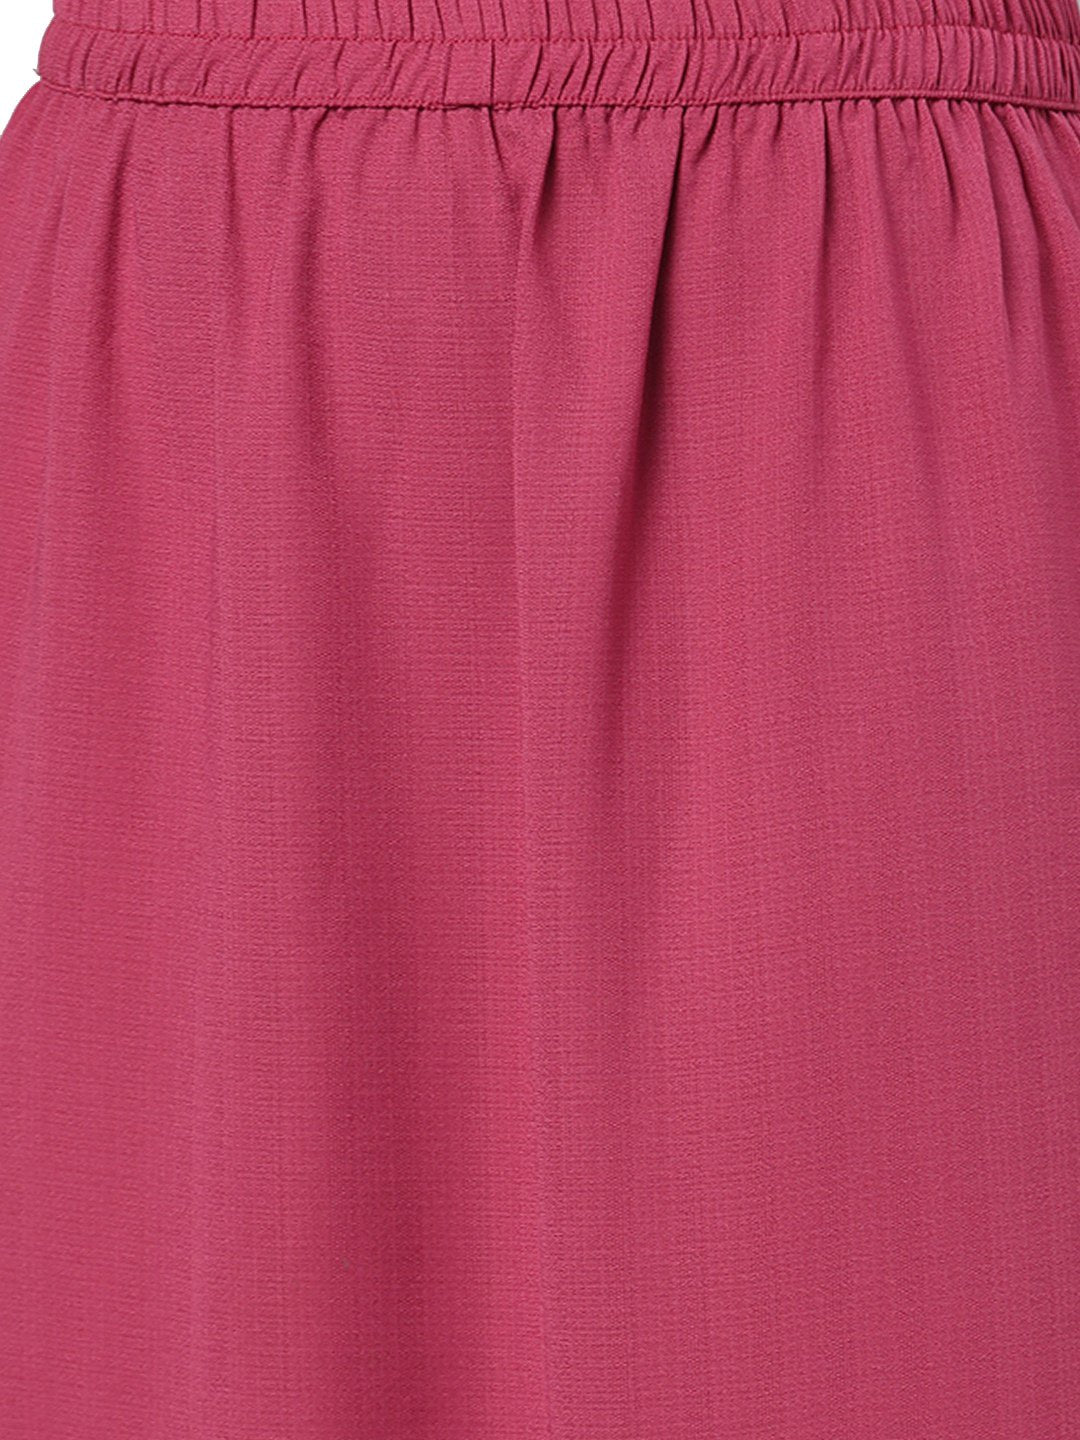 Women's Maroon Solid 3/4 Sleeve Polyester V Neck Casual Jacket & Skirt Set - Myshka